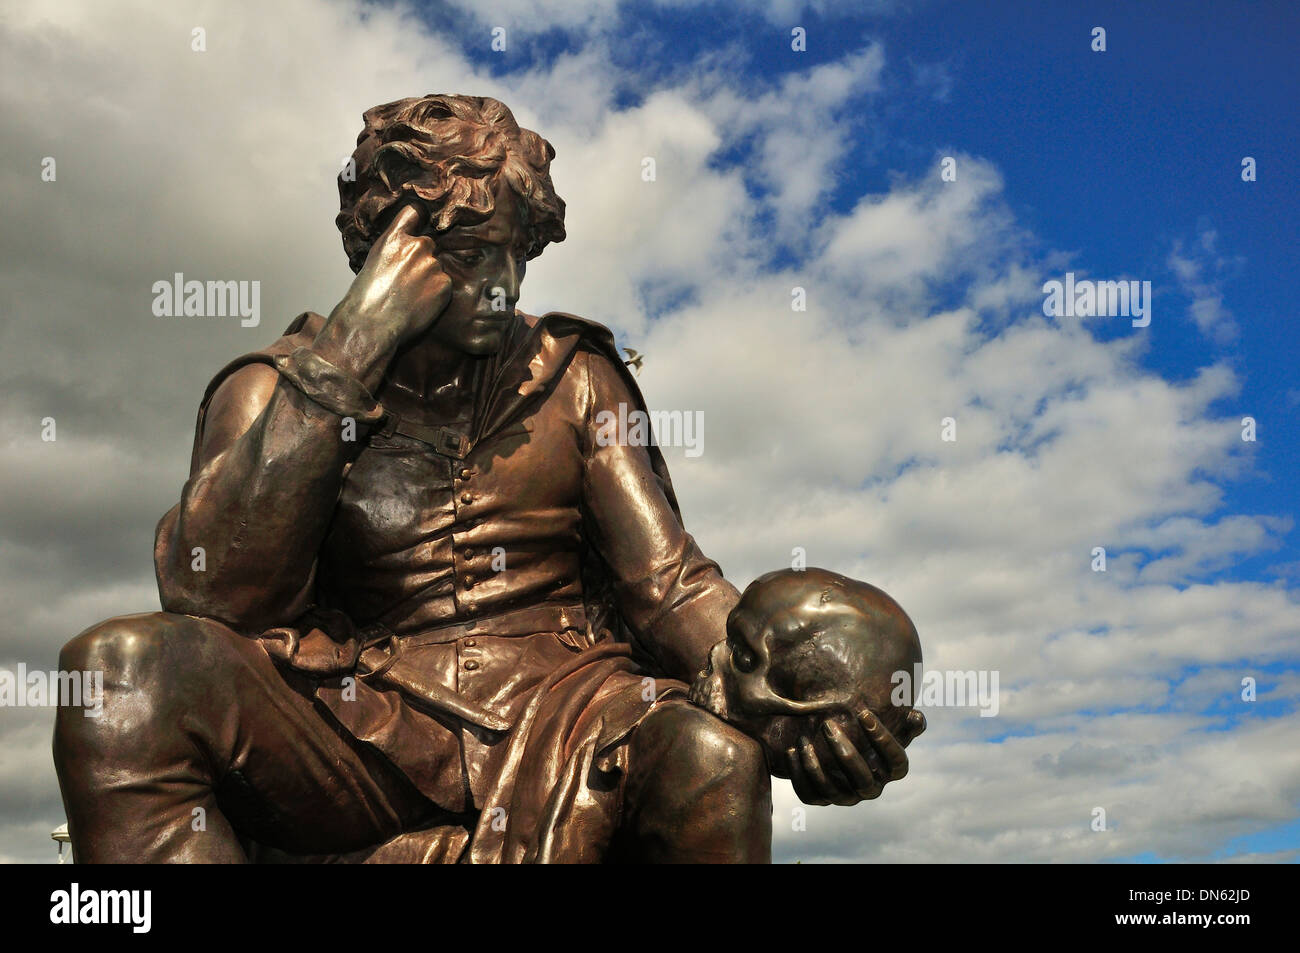 Statue de hameau, Stratford-upon-Avon, Warwickshire, Angleterre, Royaume-Uni Banque D'Images